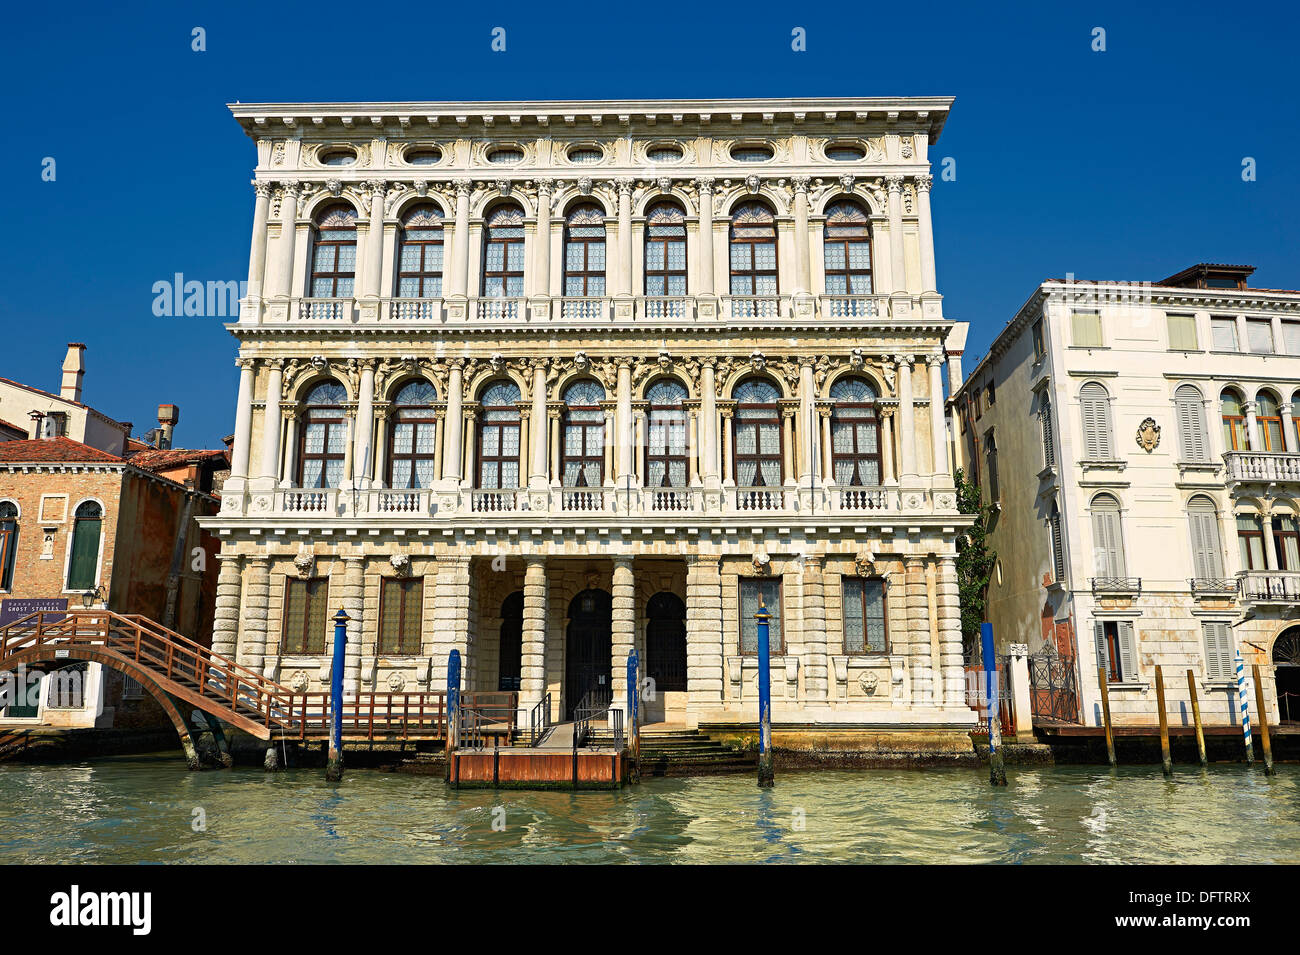 Palazzo Ca'Rezzonico, built in 1649 by Baldassarre Longhena, Baroque ...